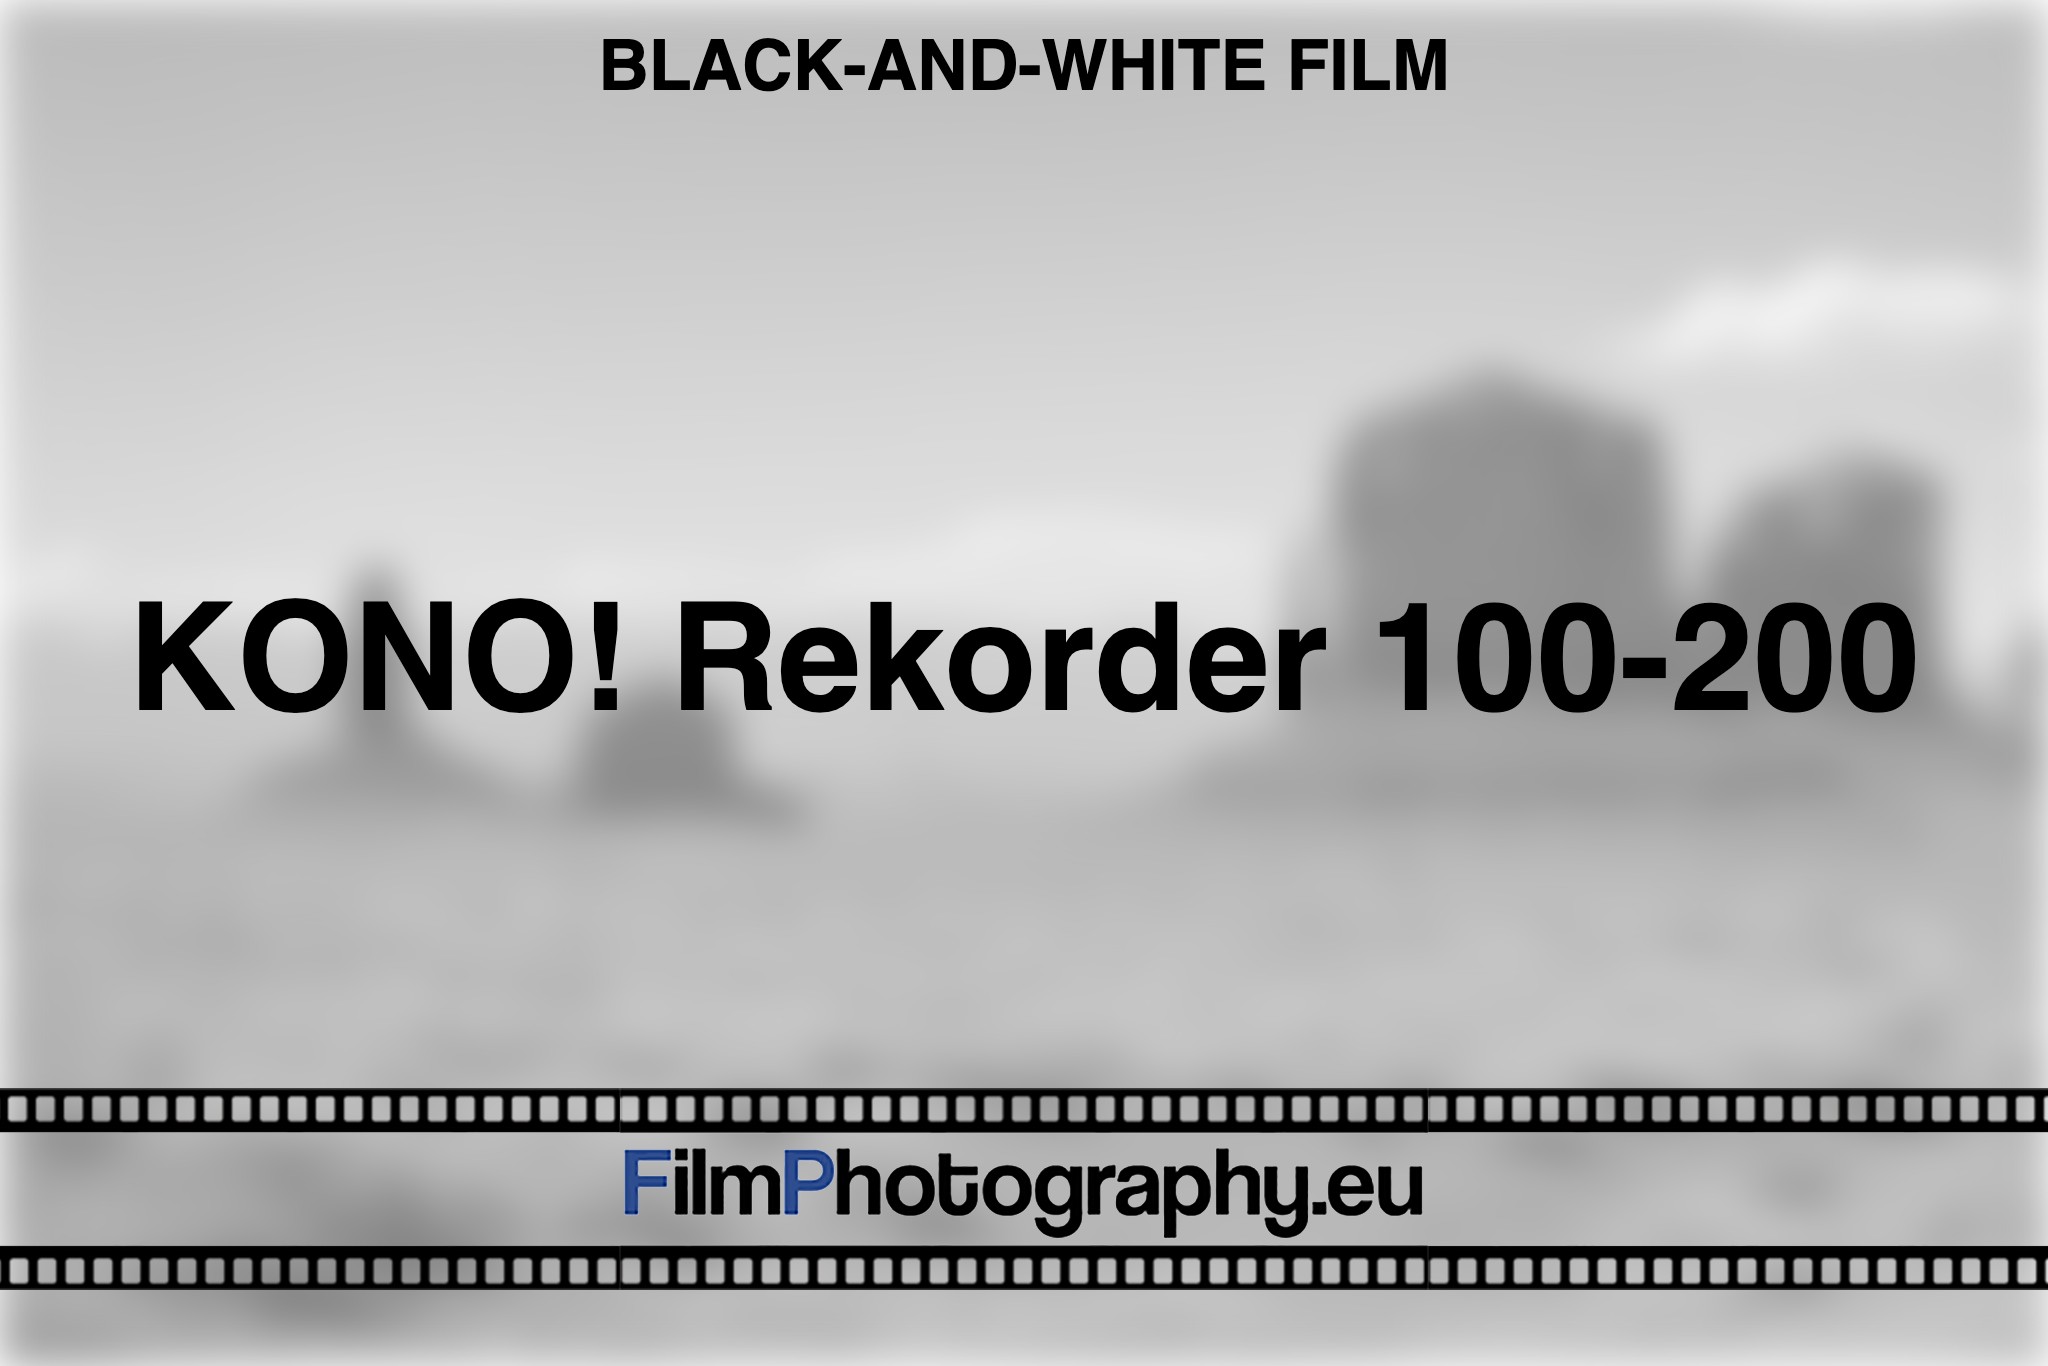 kono-rekorder-100-200-black-and-white-film-bnv